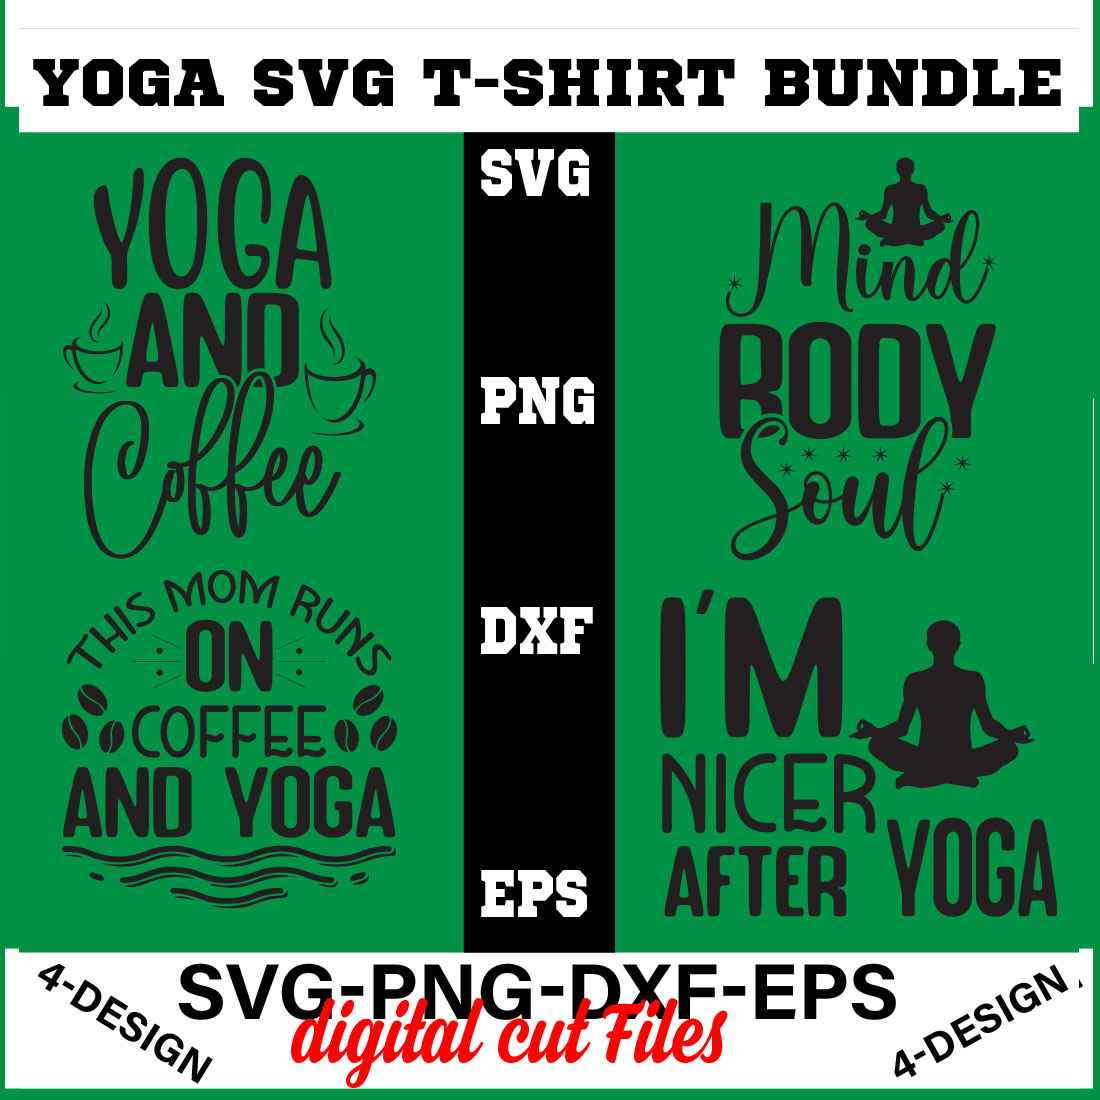 Yoga SVG Bundle - Namaste shirt SVG for Cricut - Good vibes Tee SVG bundle Volume-07 cover image.